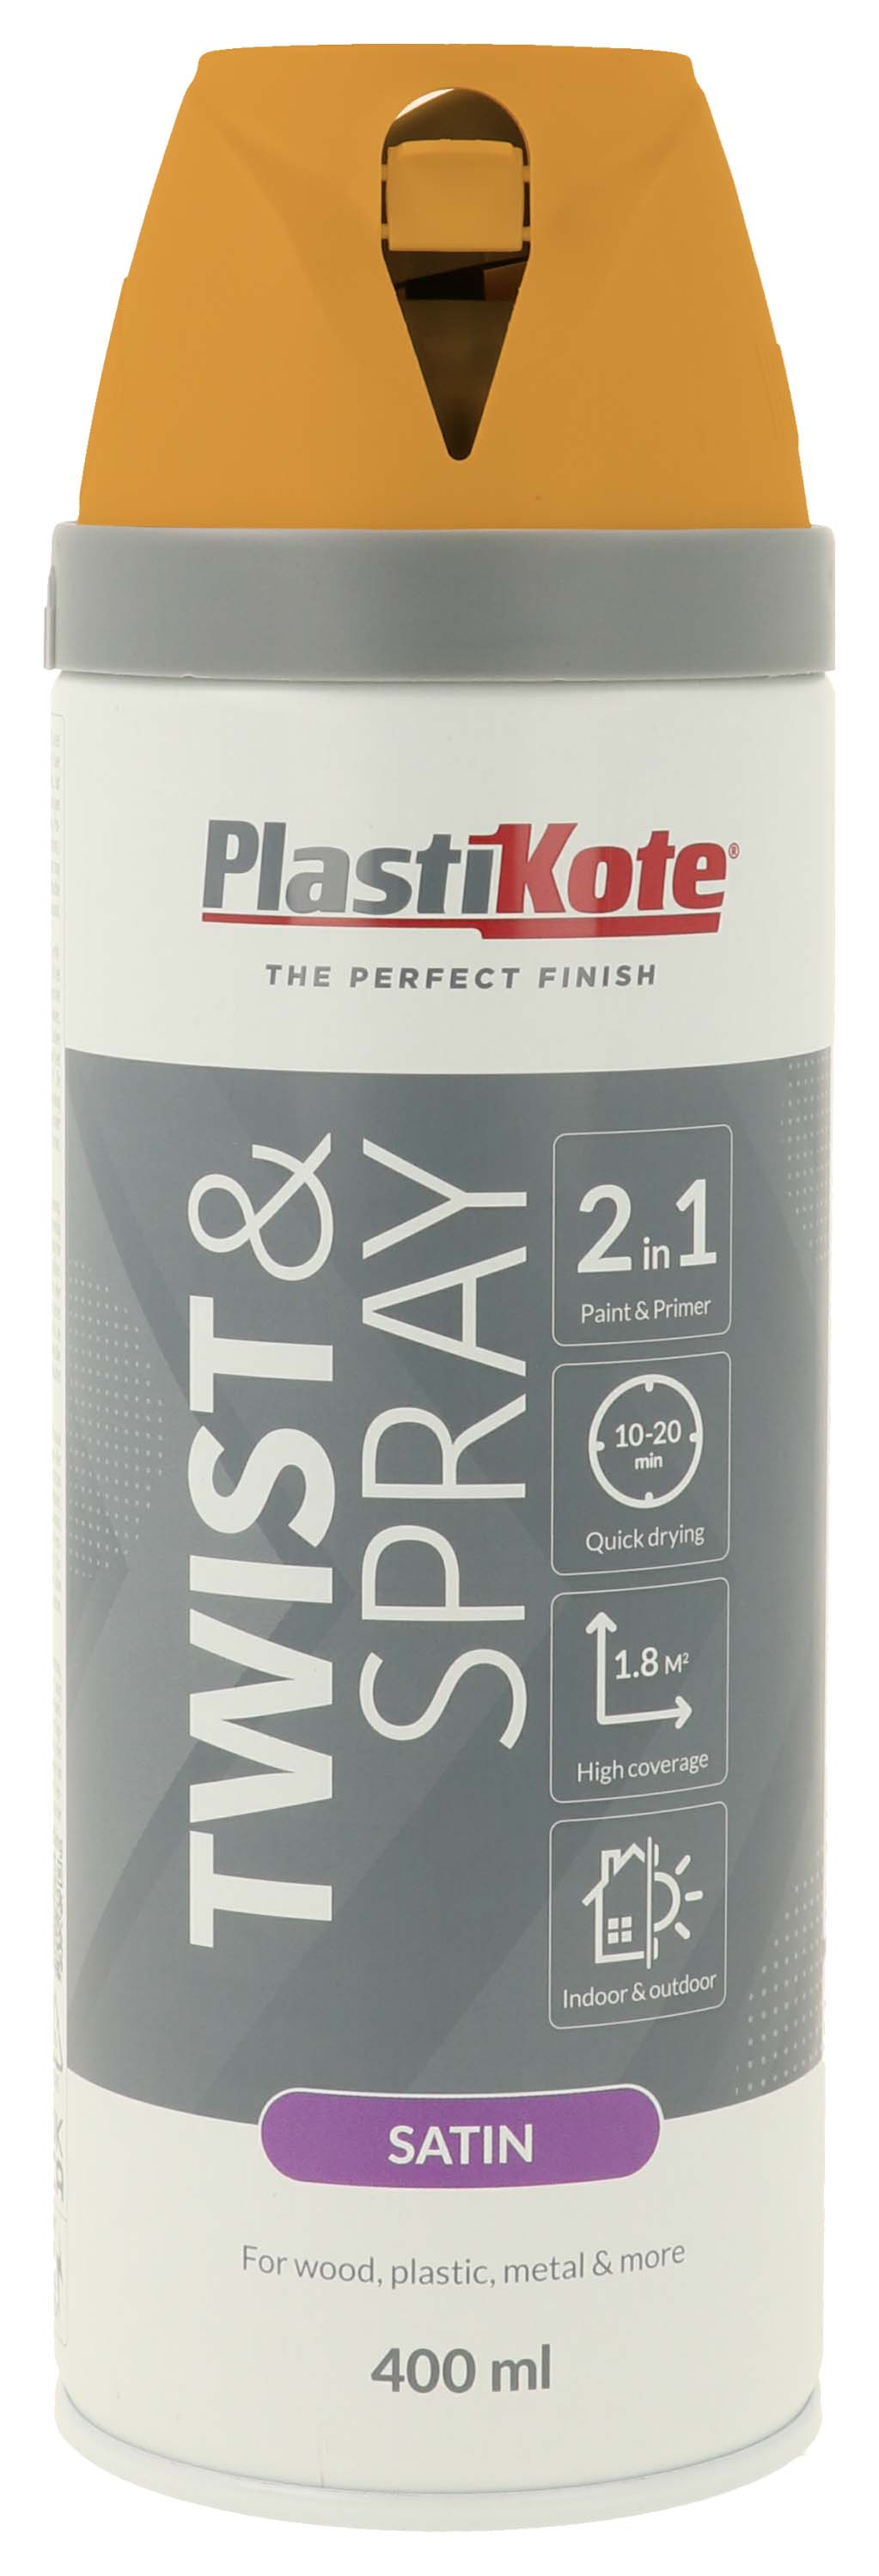 PlastiKote Twist & Spray 2 in 1 Spray Paint - Old Dutch - 400ml